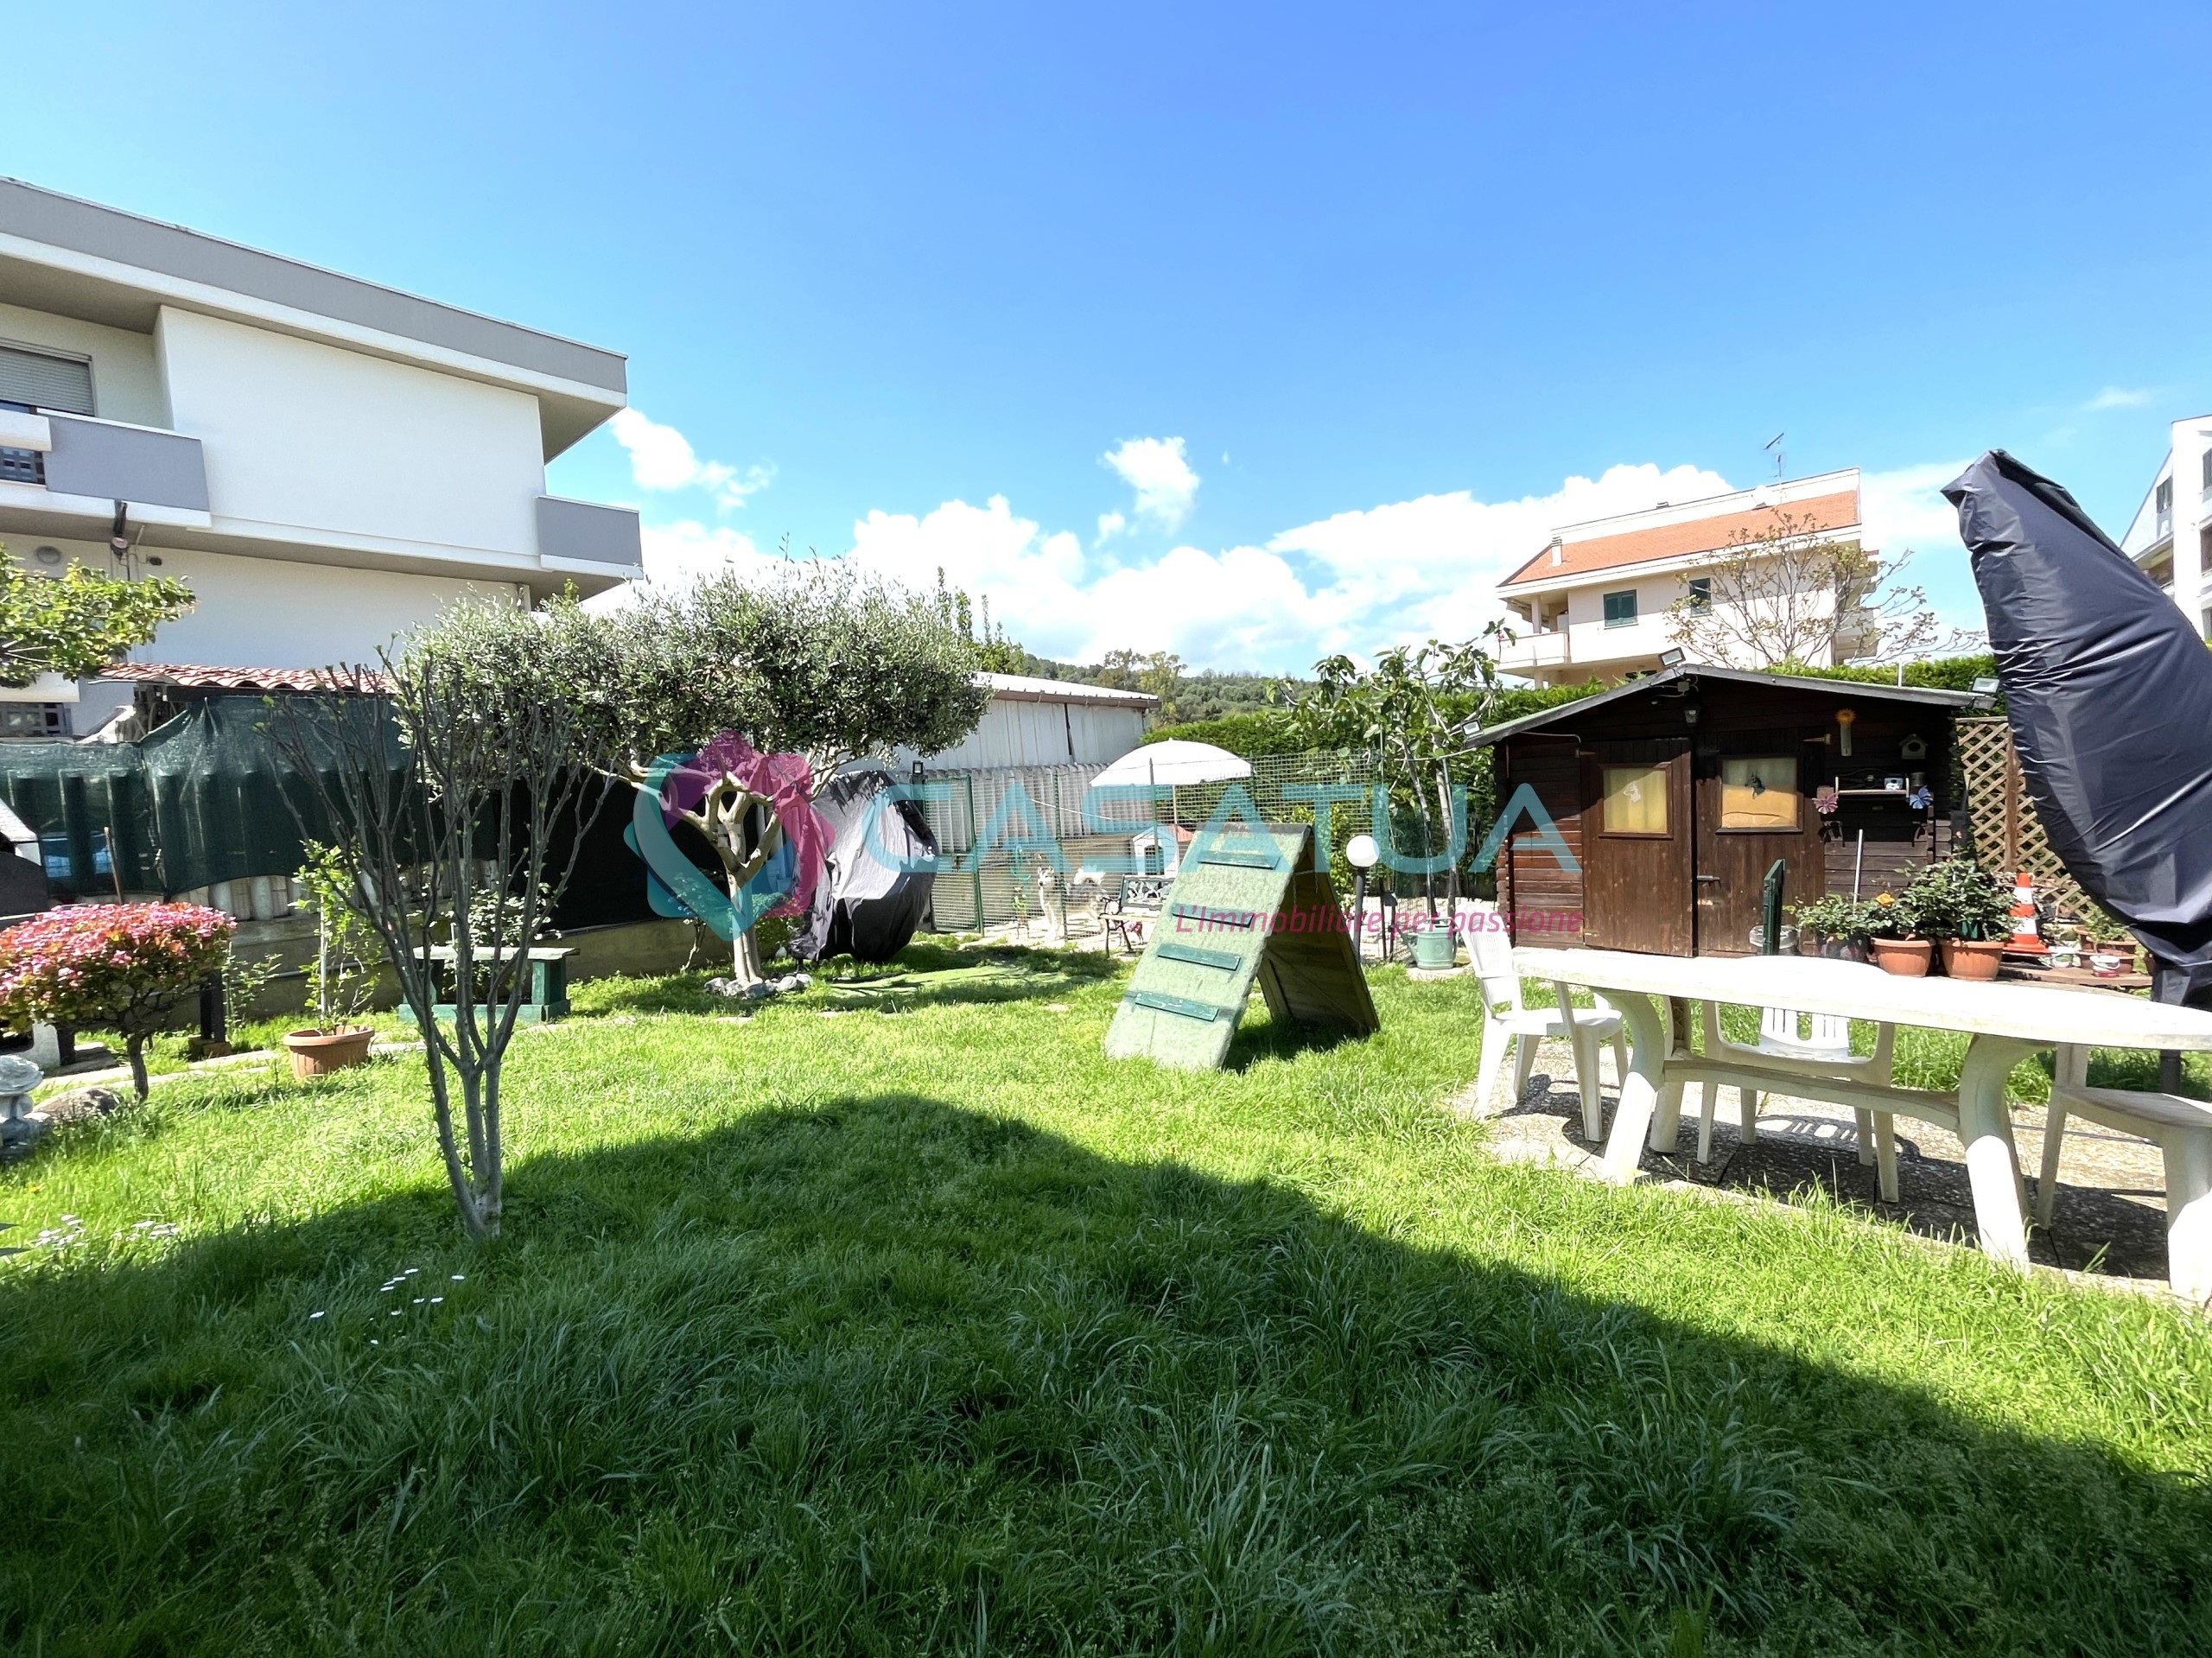 Appartamento con giardino in via montello 41, Giulianova